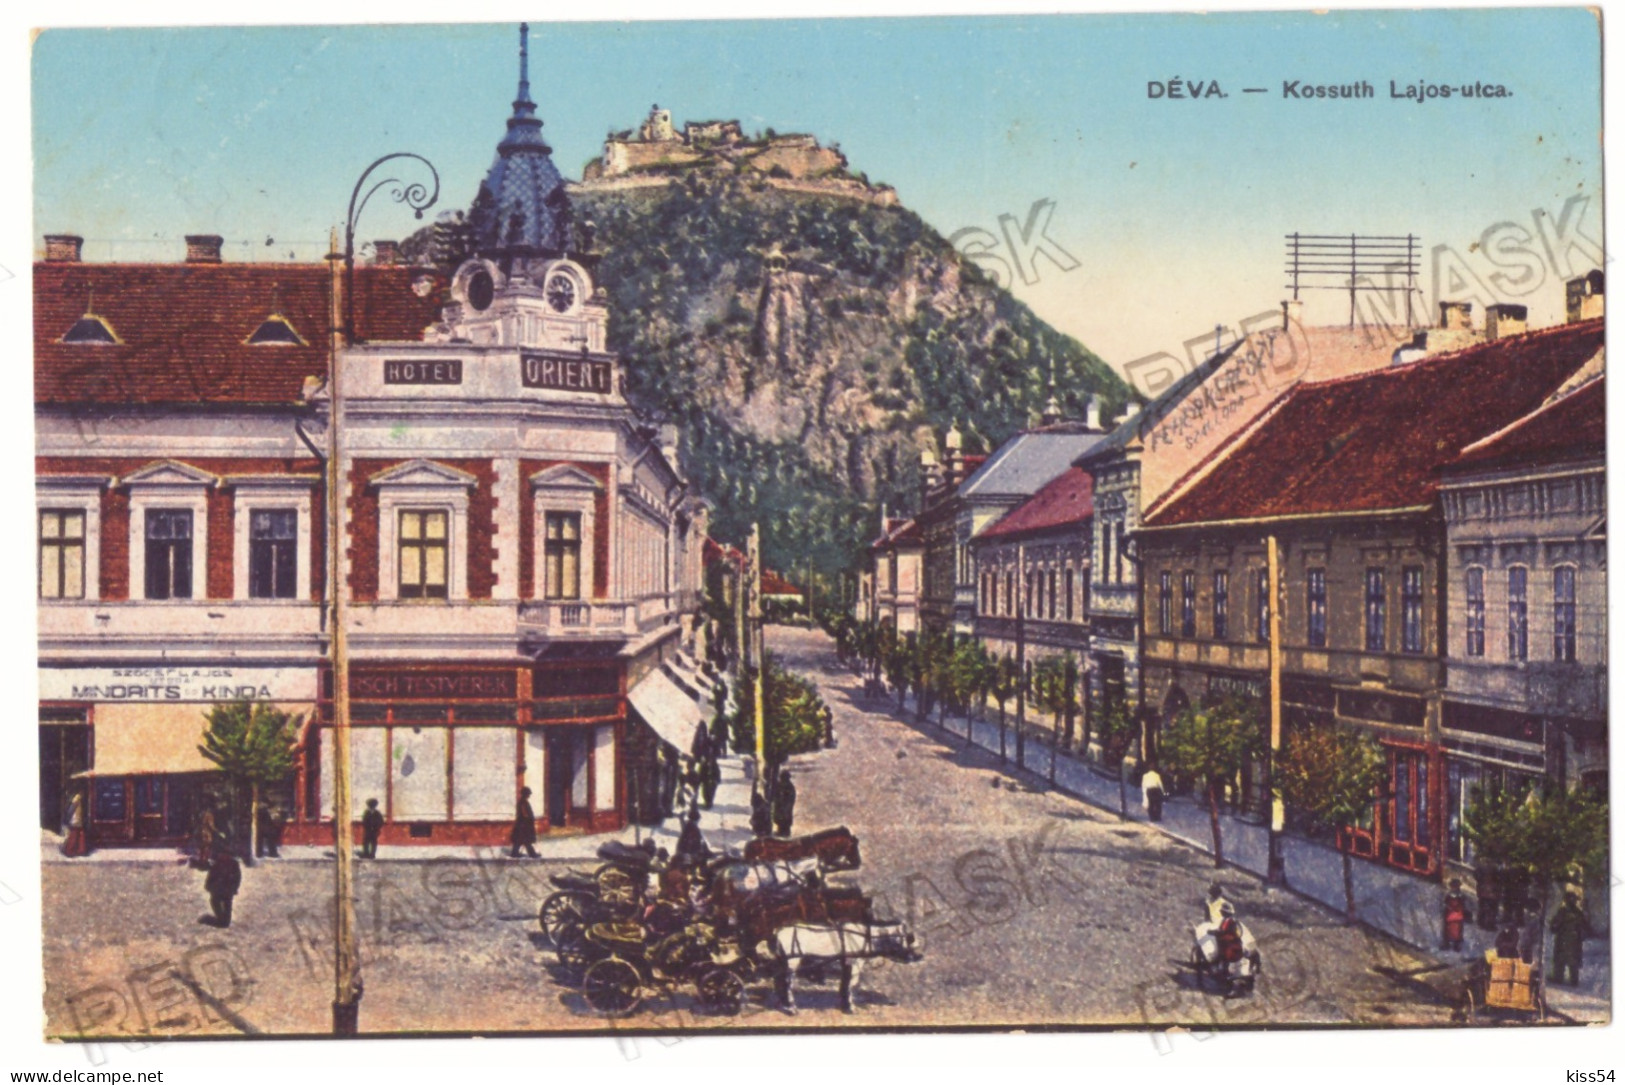 RO 82 - 22456 DEVA, Hunedoara, Market, Romania - Old Postcard - Used - 1911 - Romania